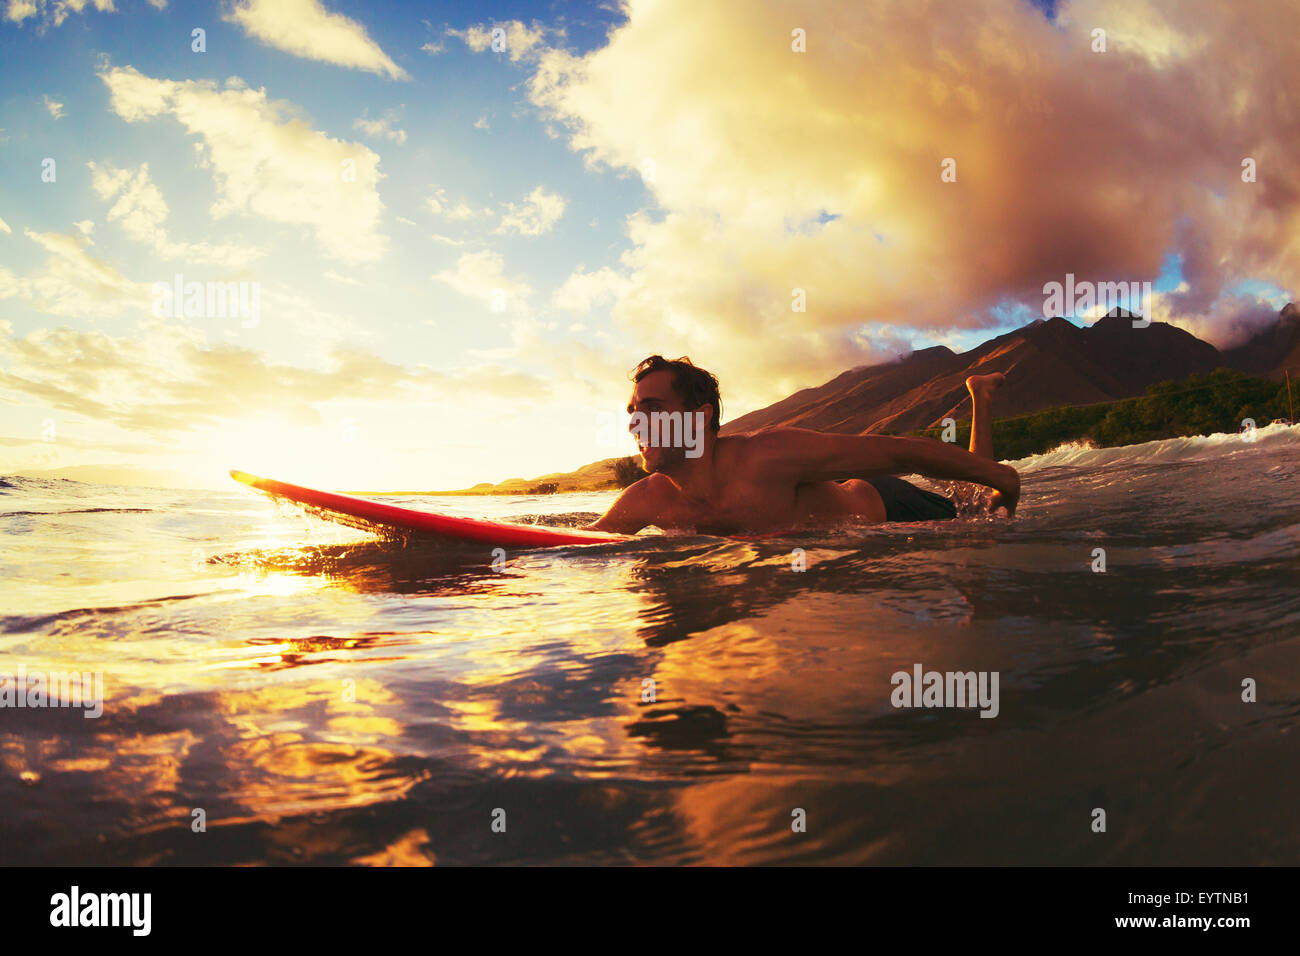 Surfen bei Sonnenuntergang. Outdoor-aktiven Lebensstil. Stockfoto